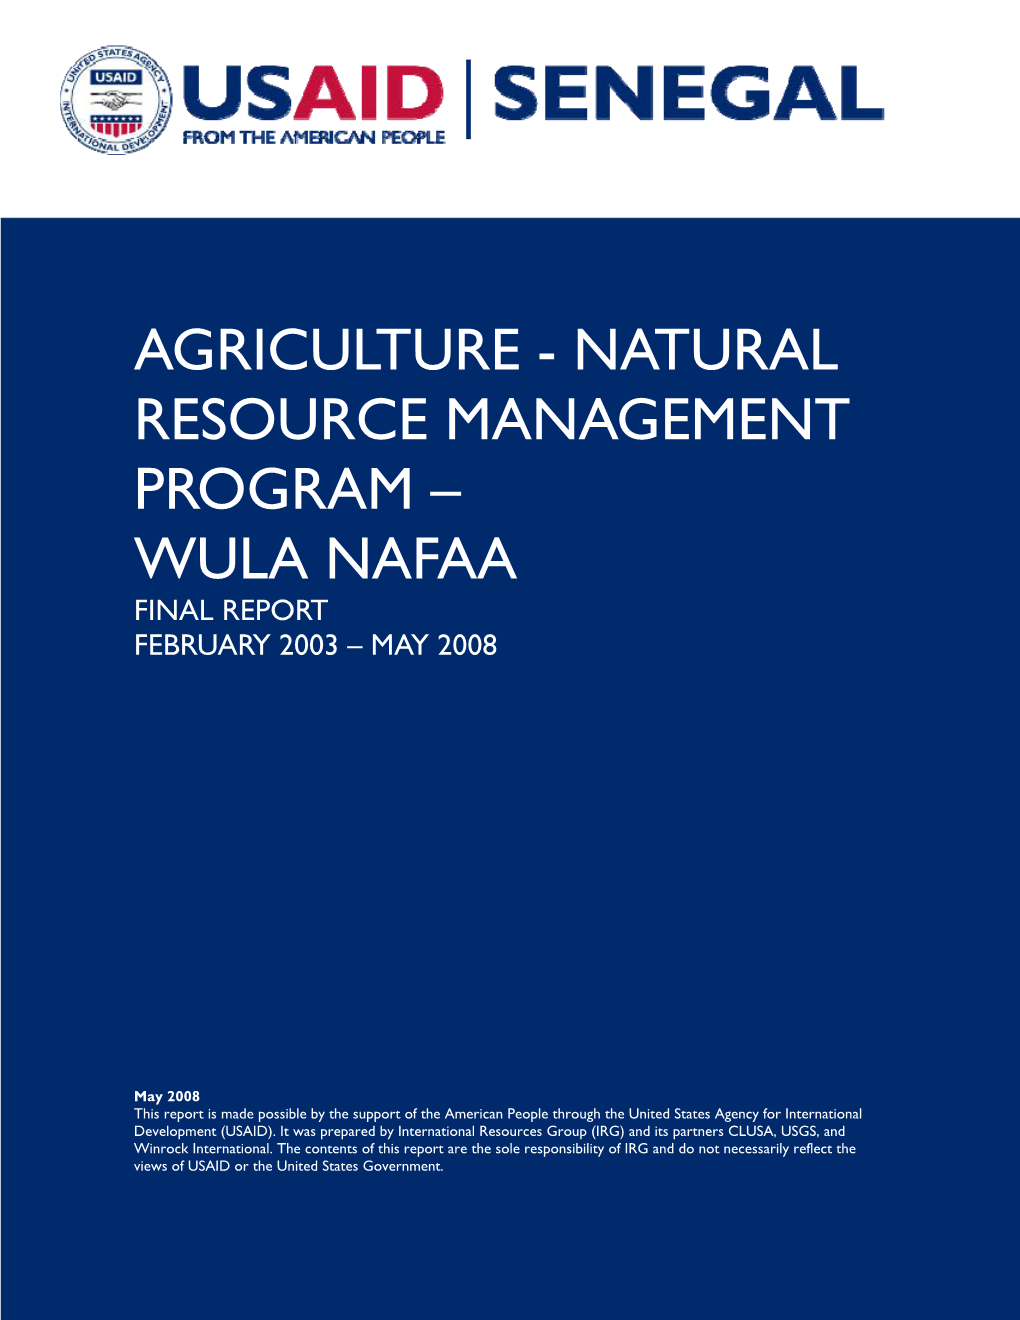 Wula Nafaa Final Report February 2003 – May 2008